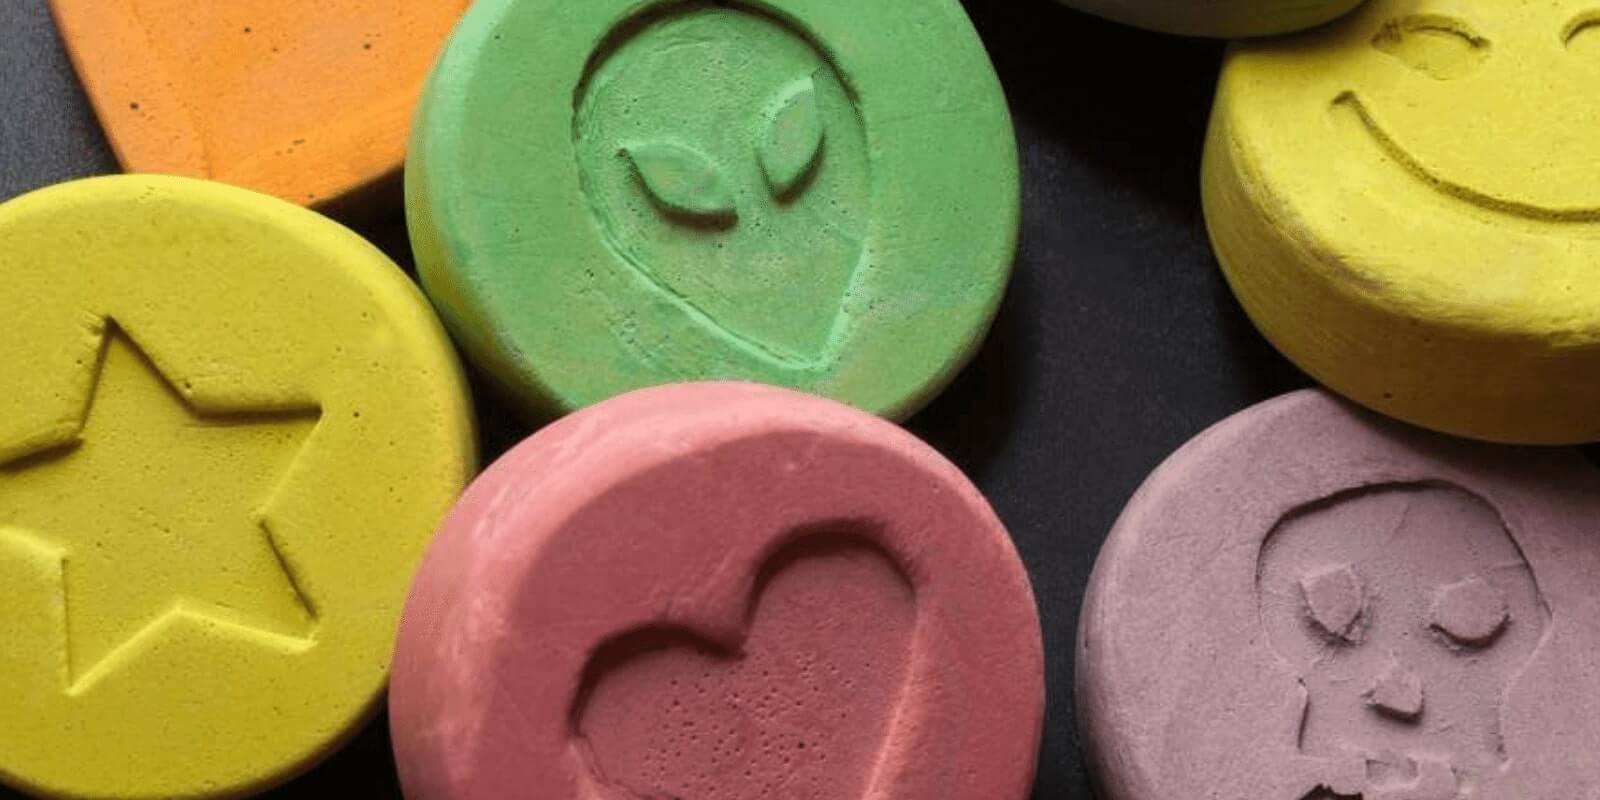 Colorful MDMA pills